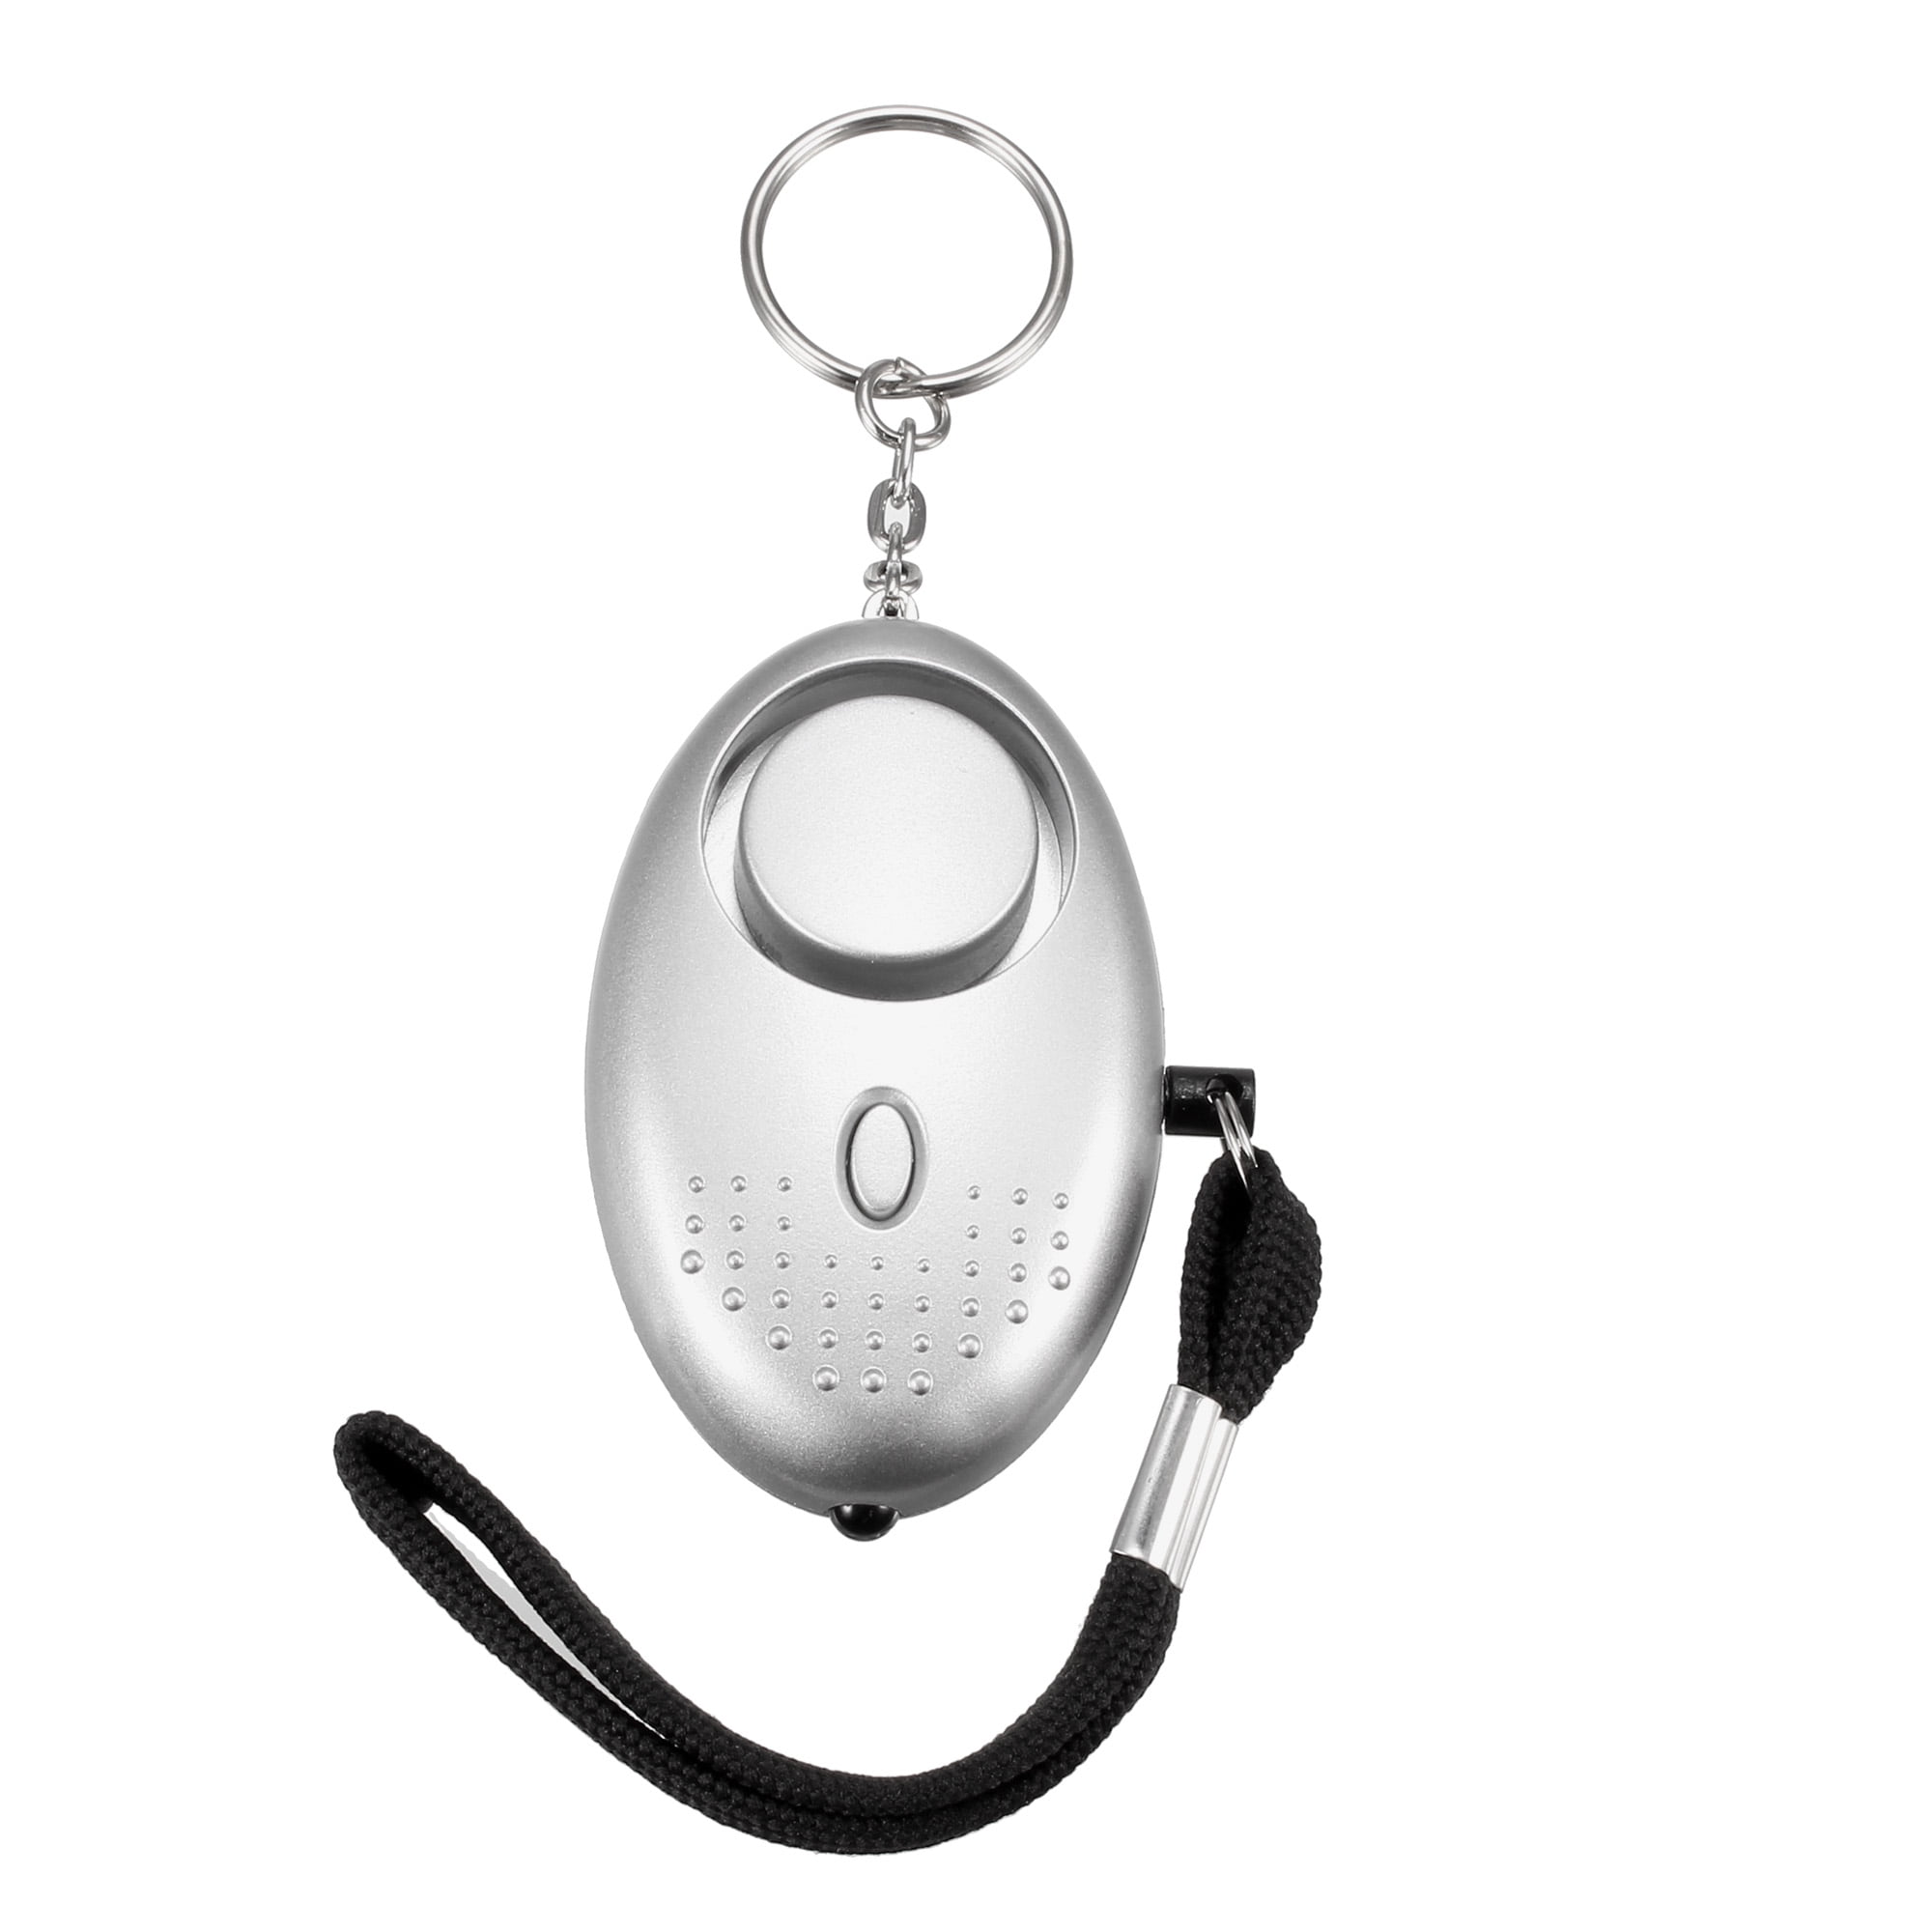 2pcs/Pack TOROTON Emergency Personal Alarm Keychain Portable Key Chain Safety Alarm for Elderly/Women/Kids/Girls,Explorer Self Defense Electronic Device Bag Decoration Silver